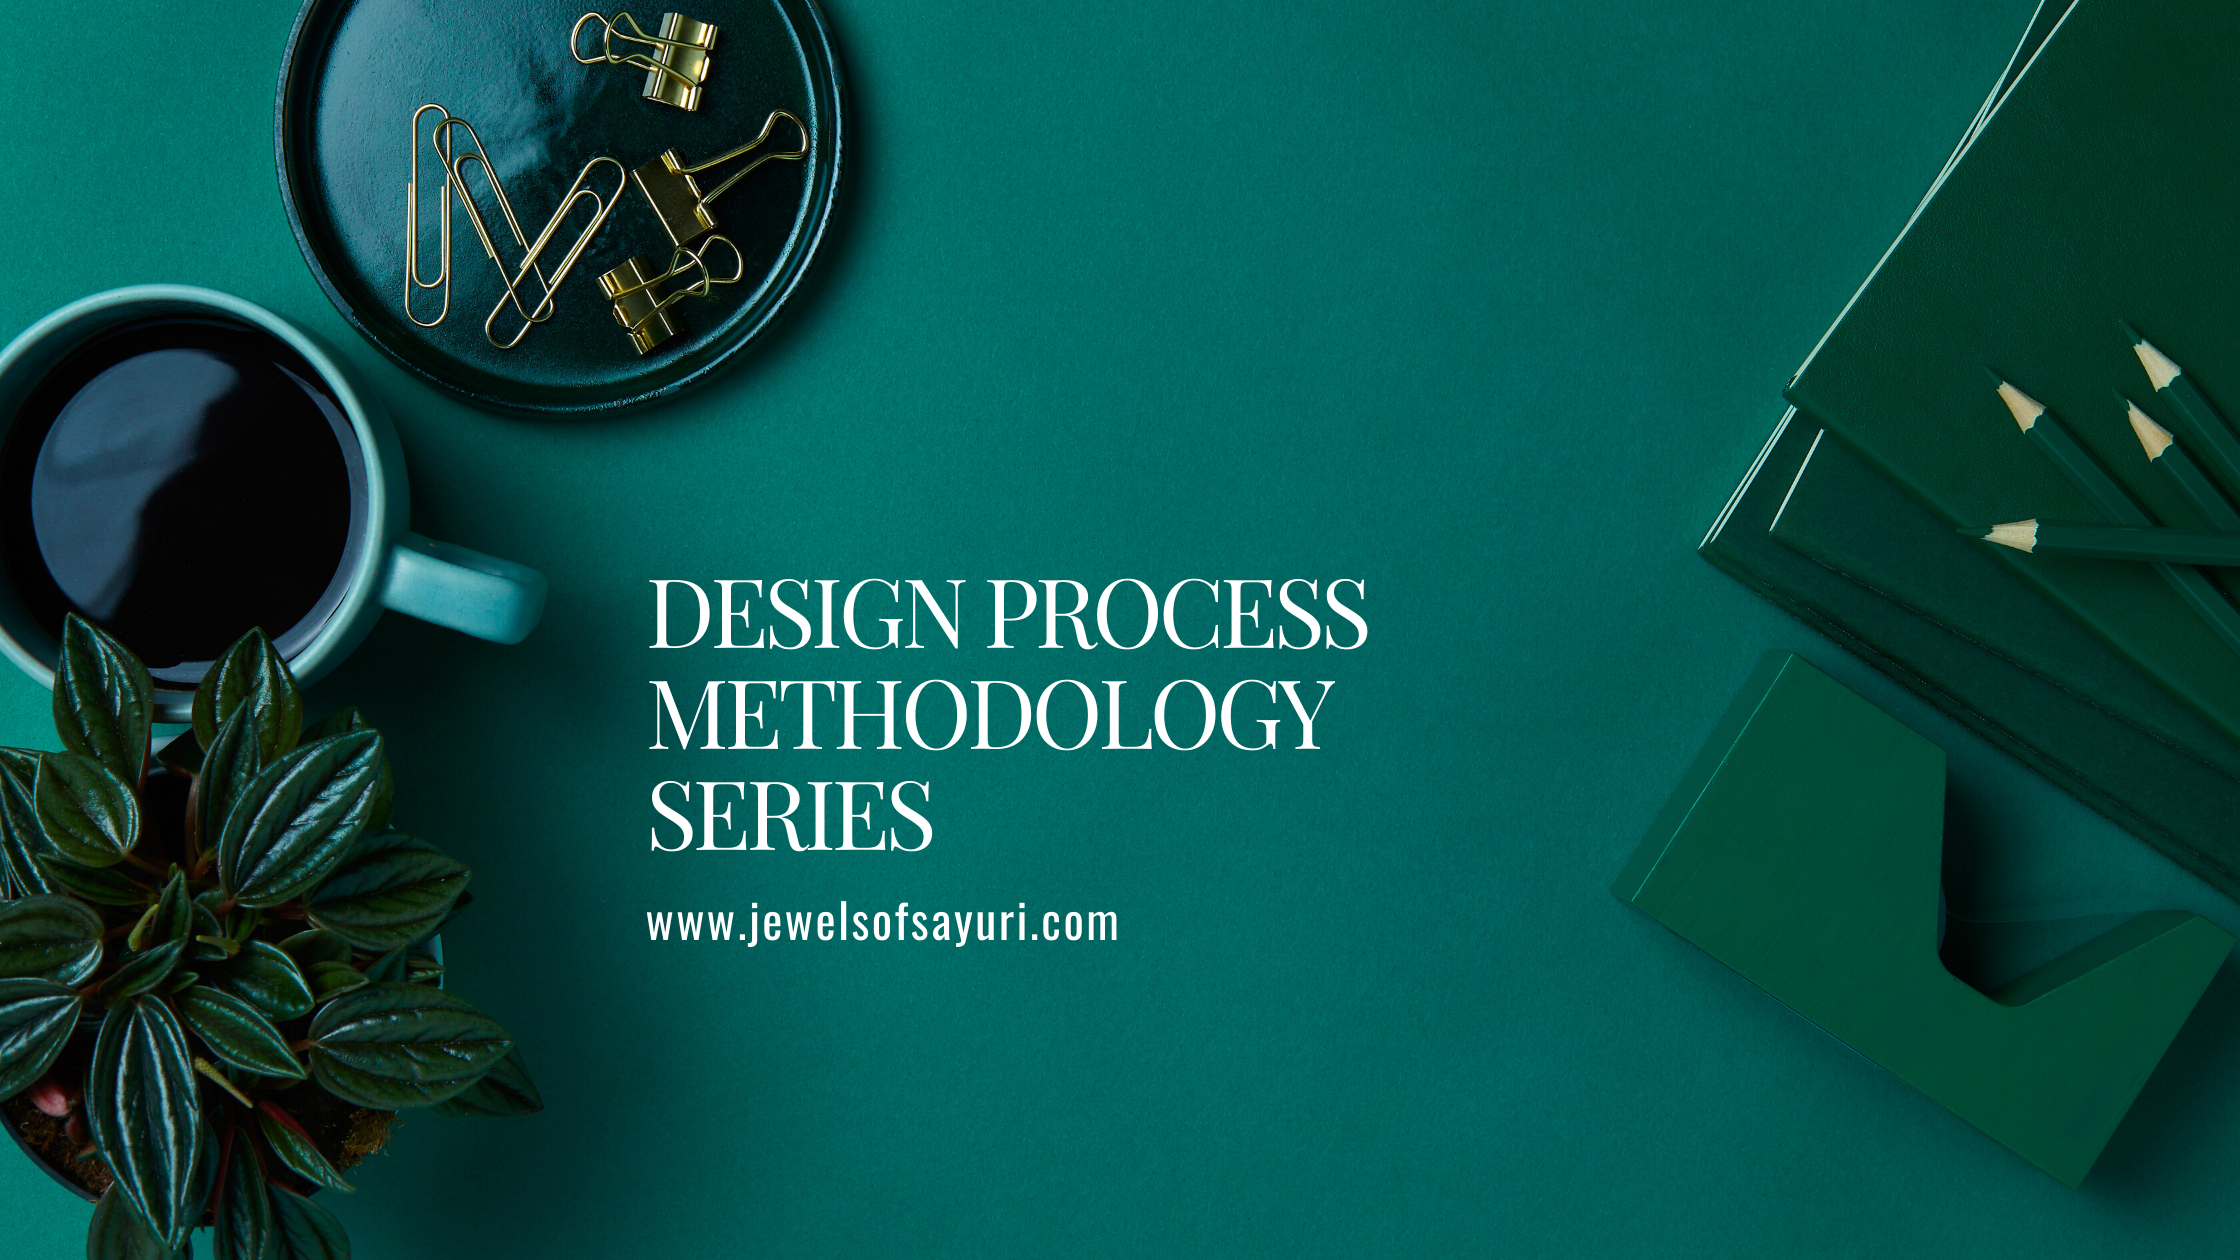 Design process methodology series